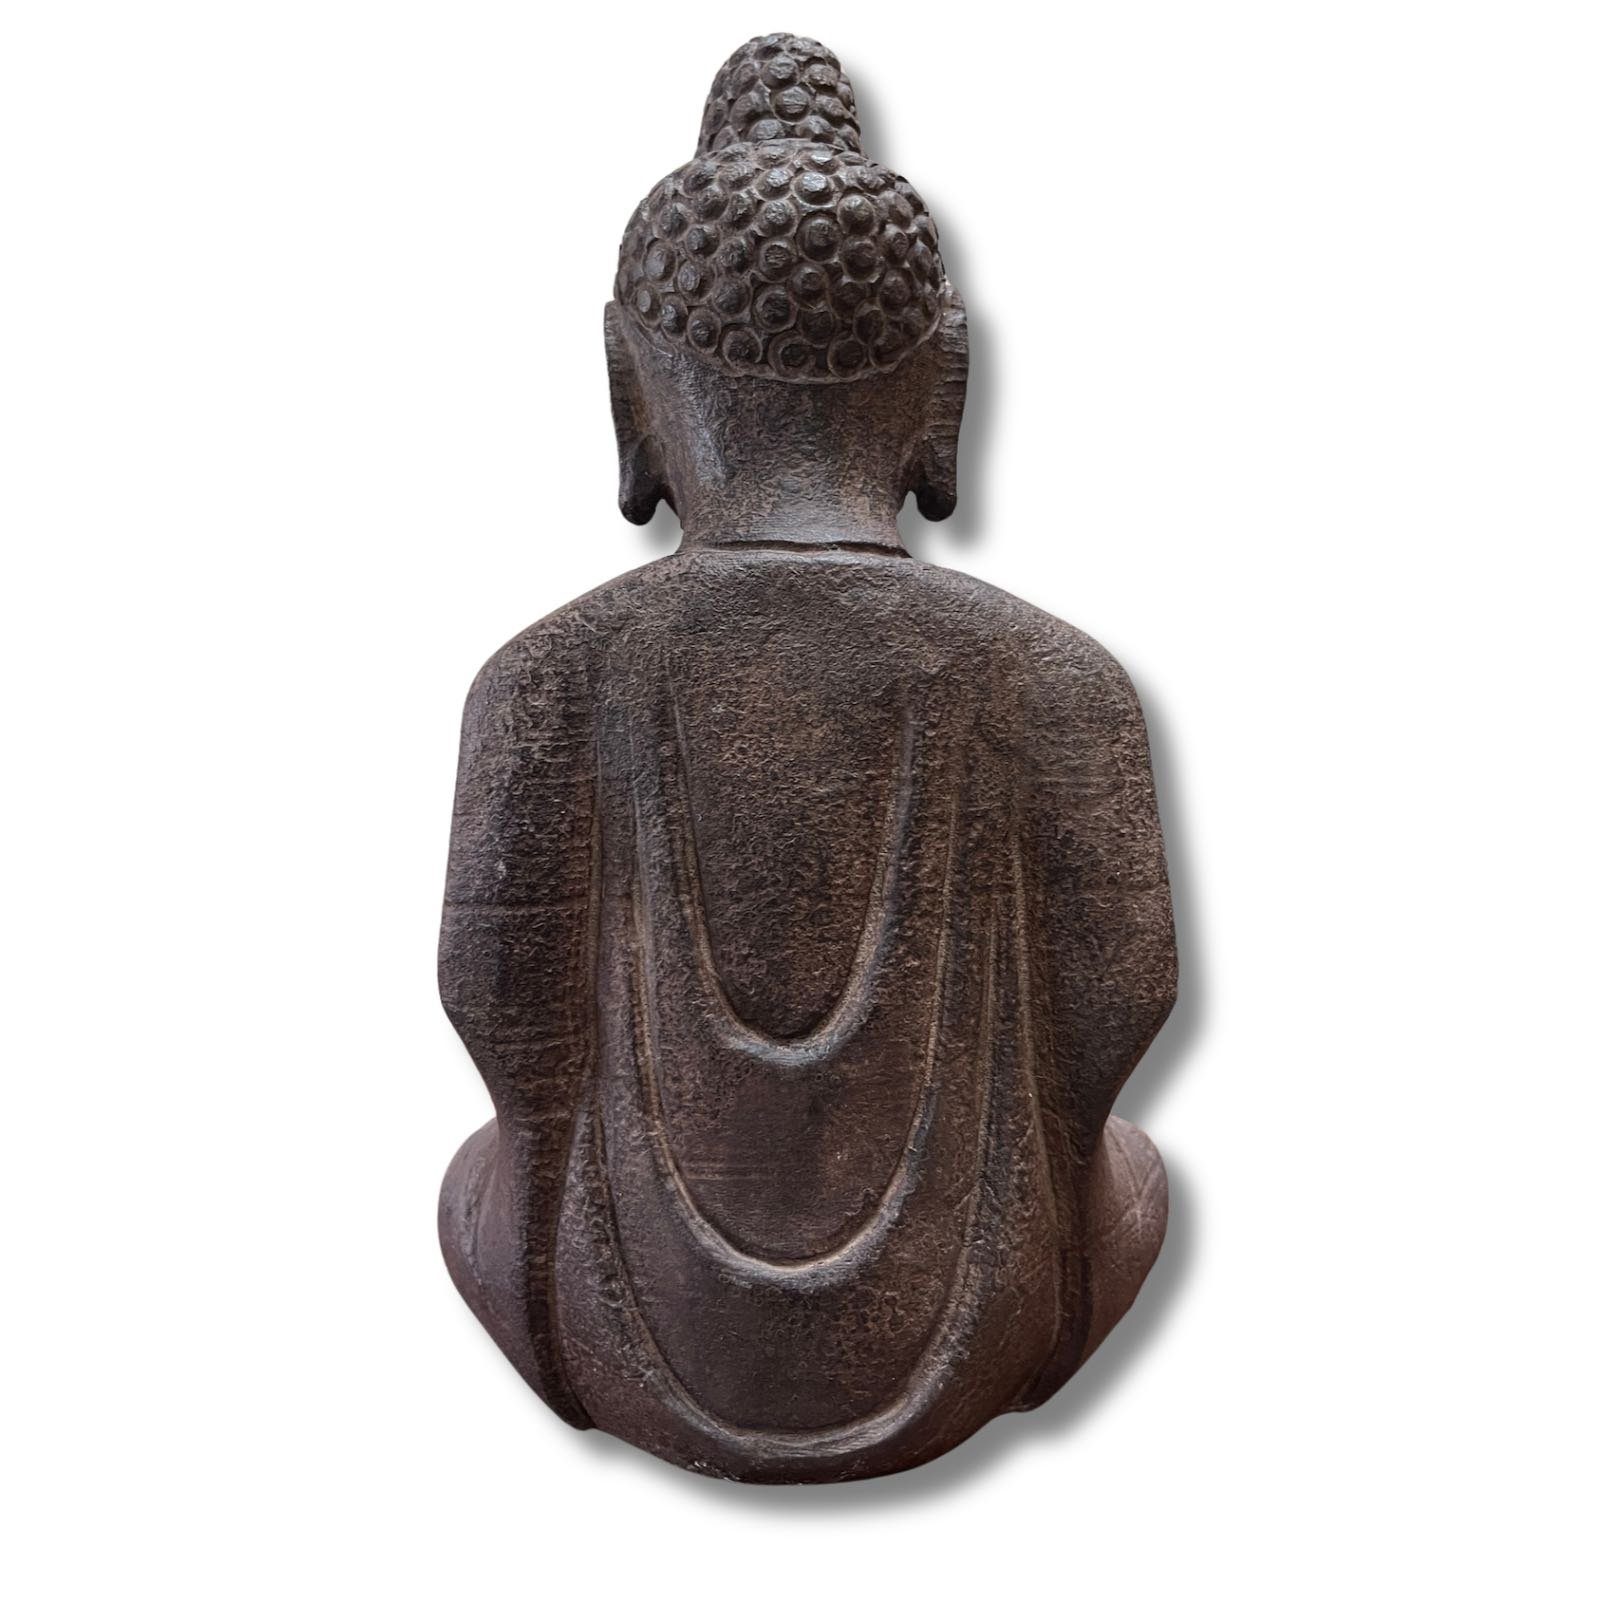 Asien LifeStyle Figur Tibet Buddha Meditation Buddhafigur Garten groß Naturstein China 36cm